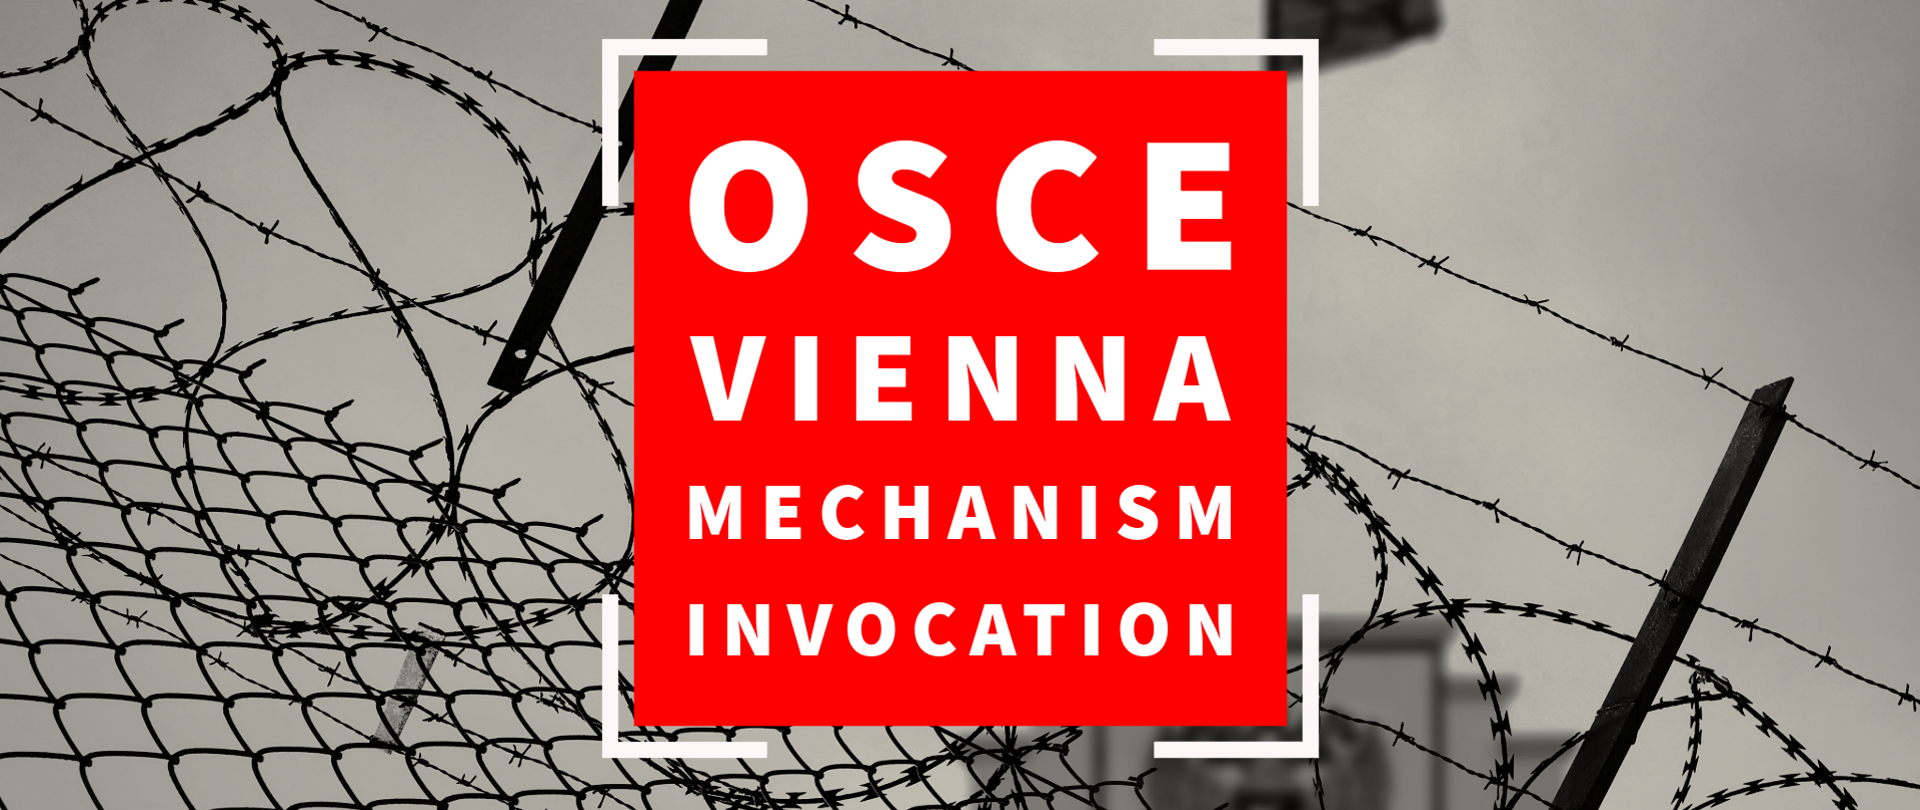 Vienna Mechanism Invocation